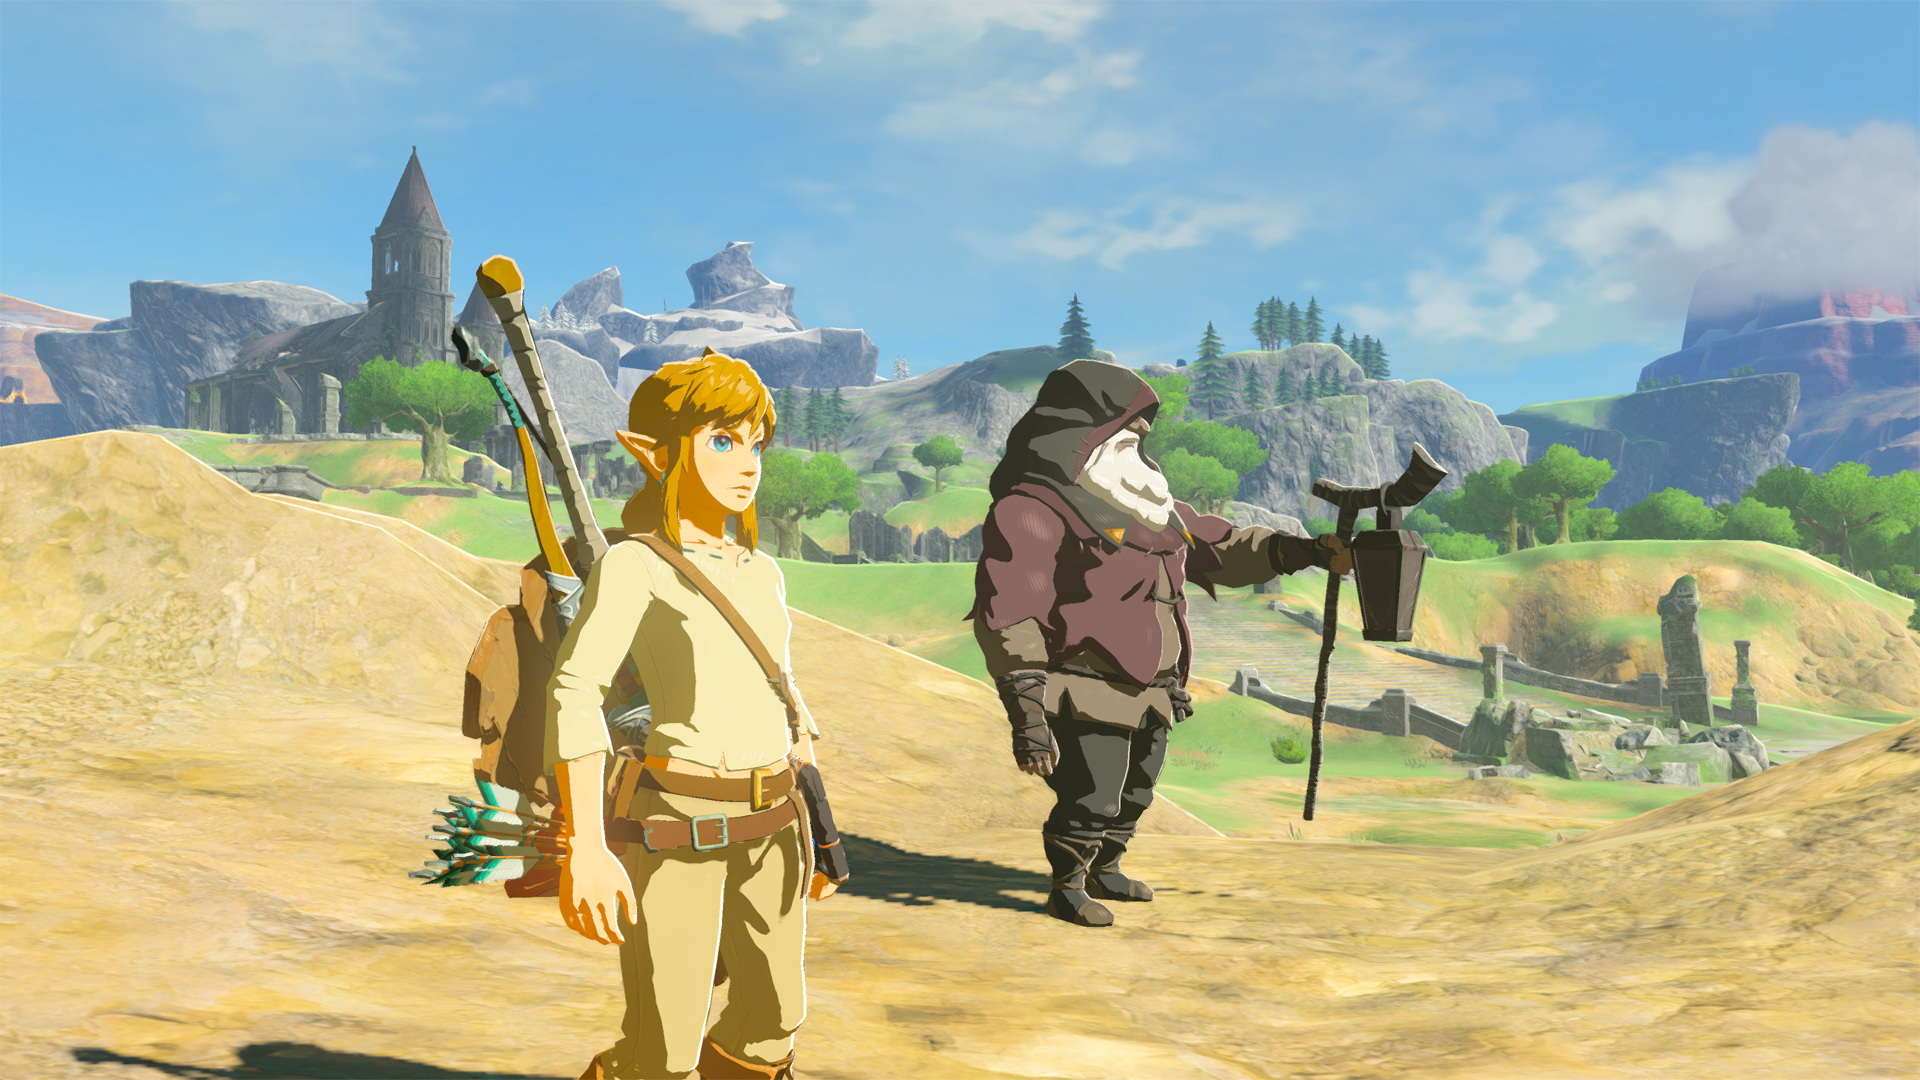 Zelda: Breath of the Wild, Horizon Zero Dawn Lead GDC Award